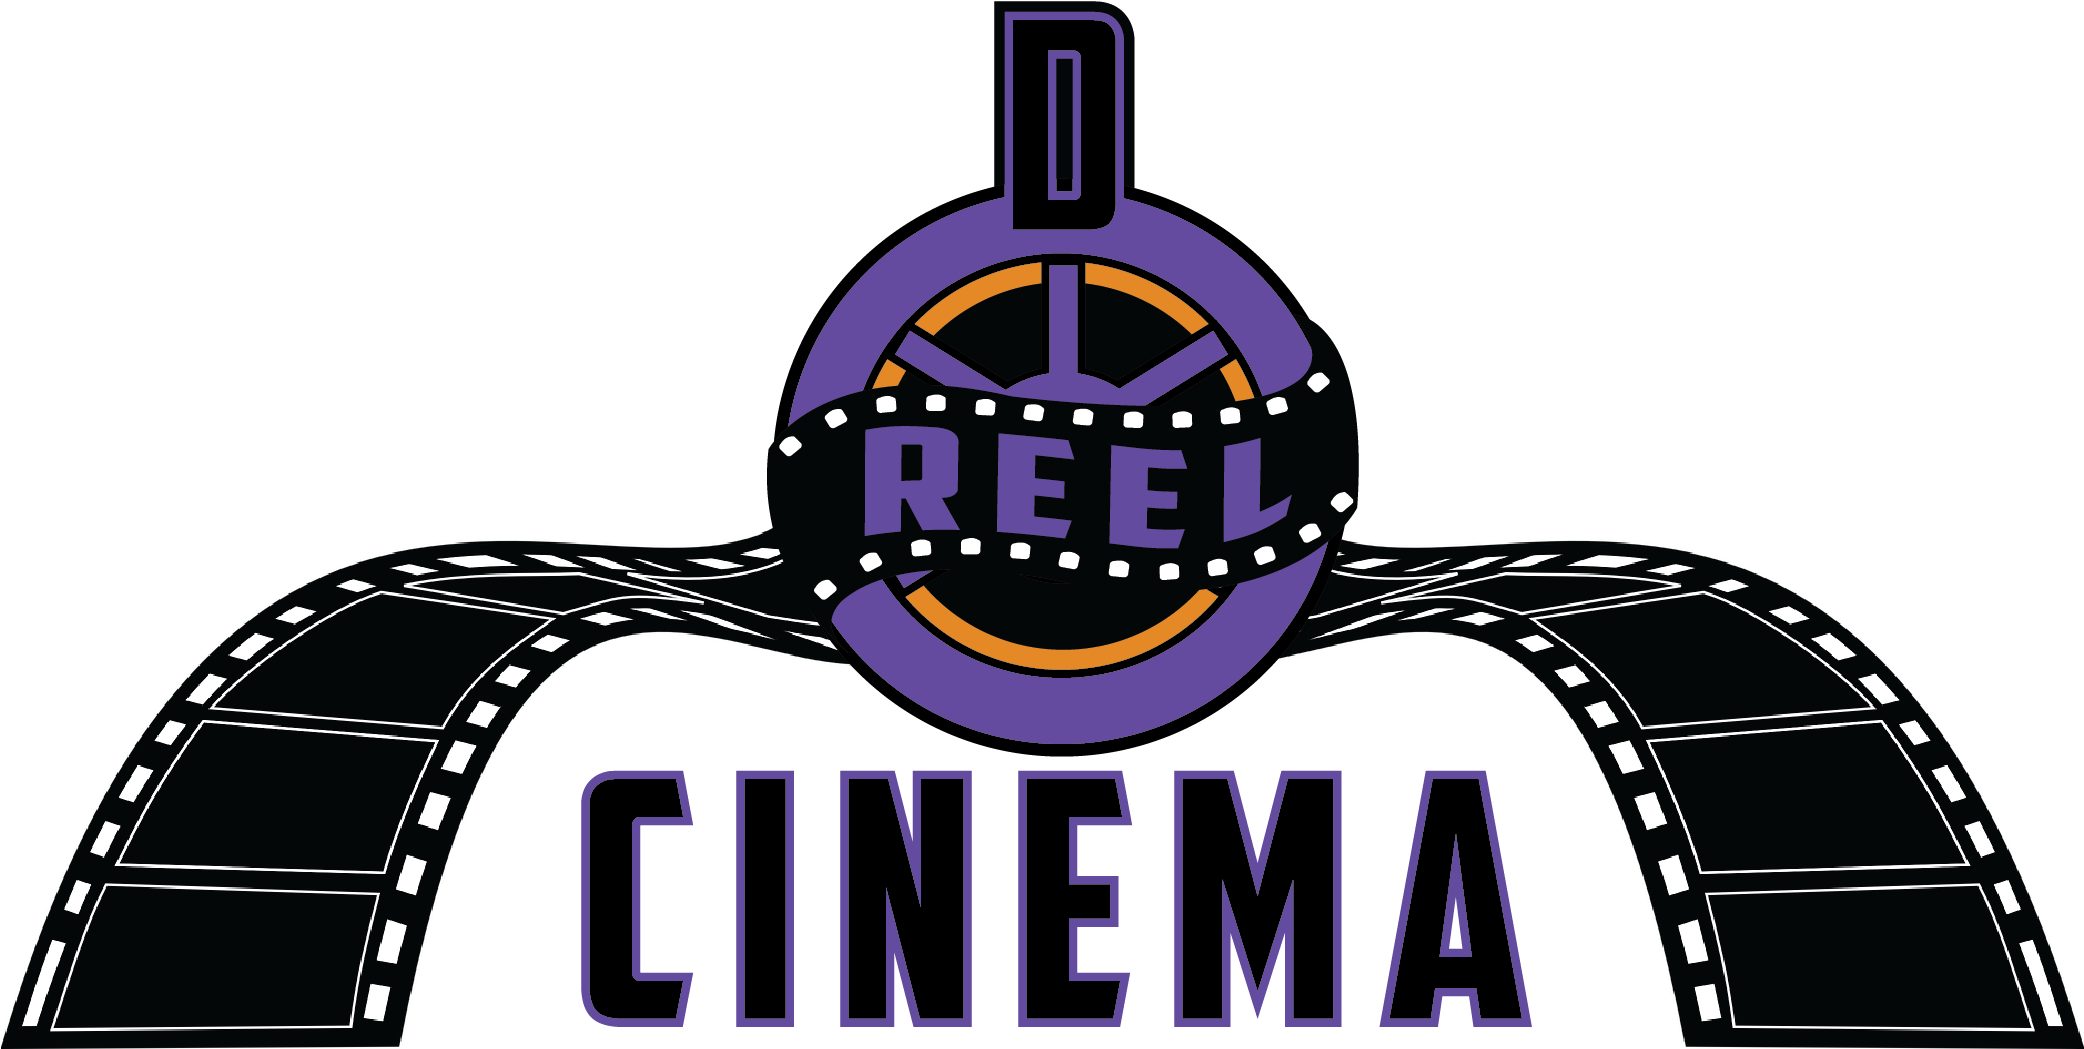 D Reel Cinema Logo - Reels Cinema Logo Png (2083x1141), Png Download